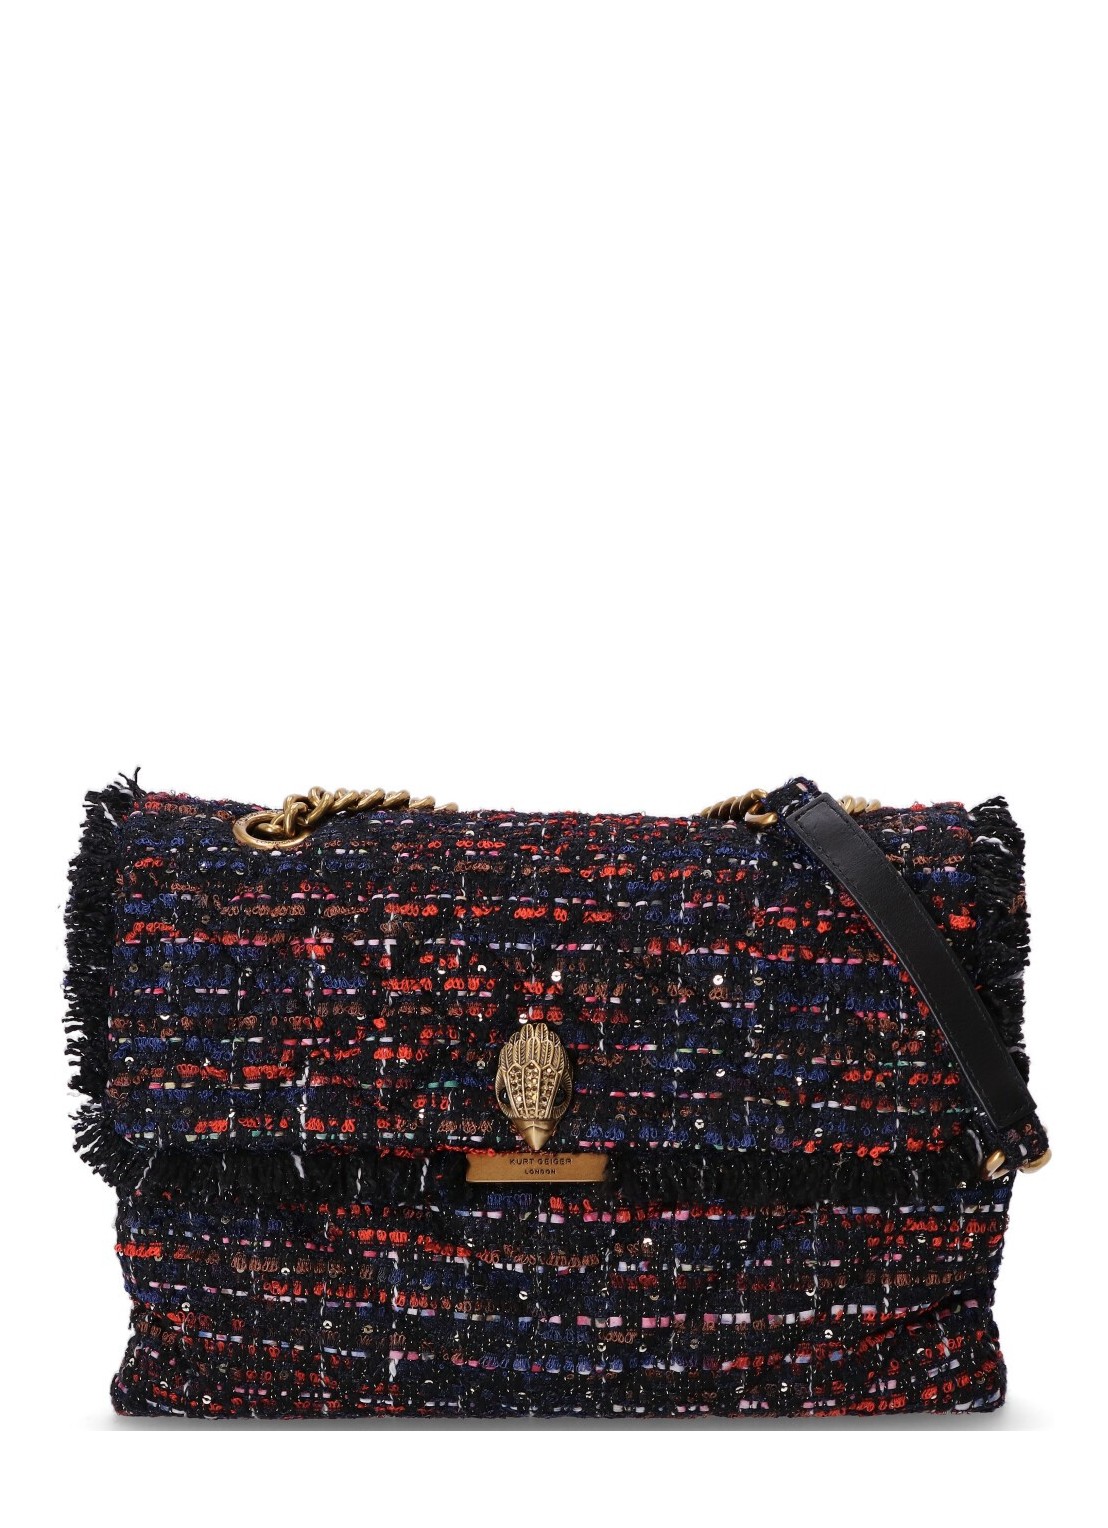 Handbag kurt geiger handbag woman tweed lg kensington x bag 1595755609 55 talla T/U
 